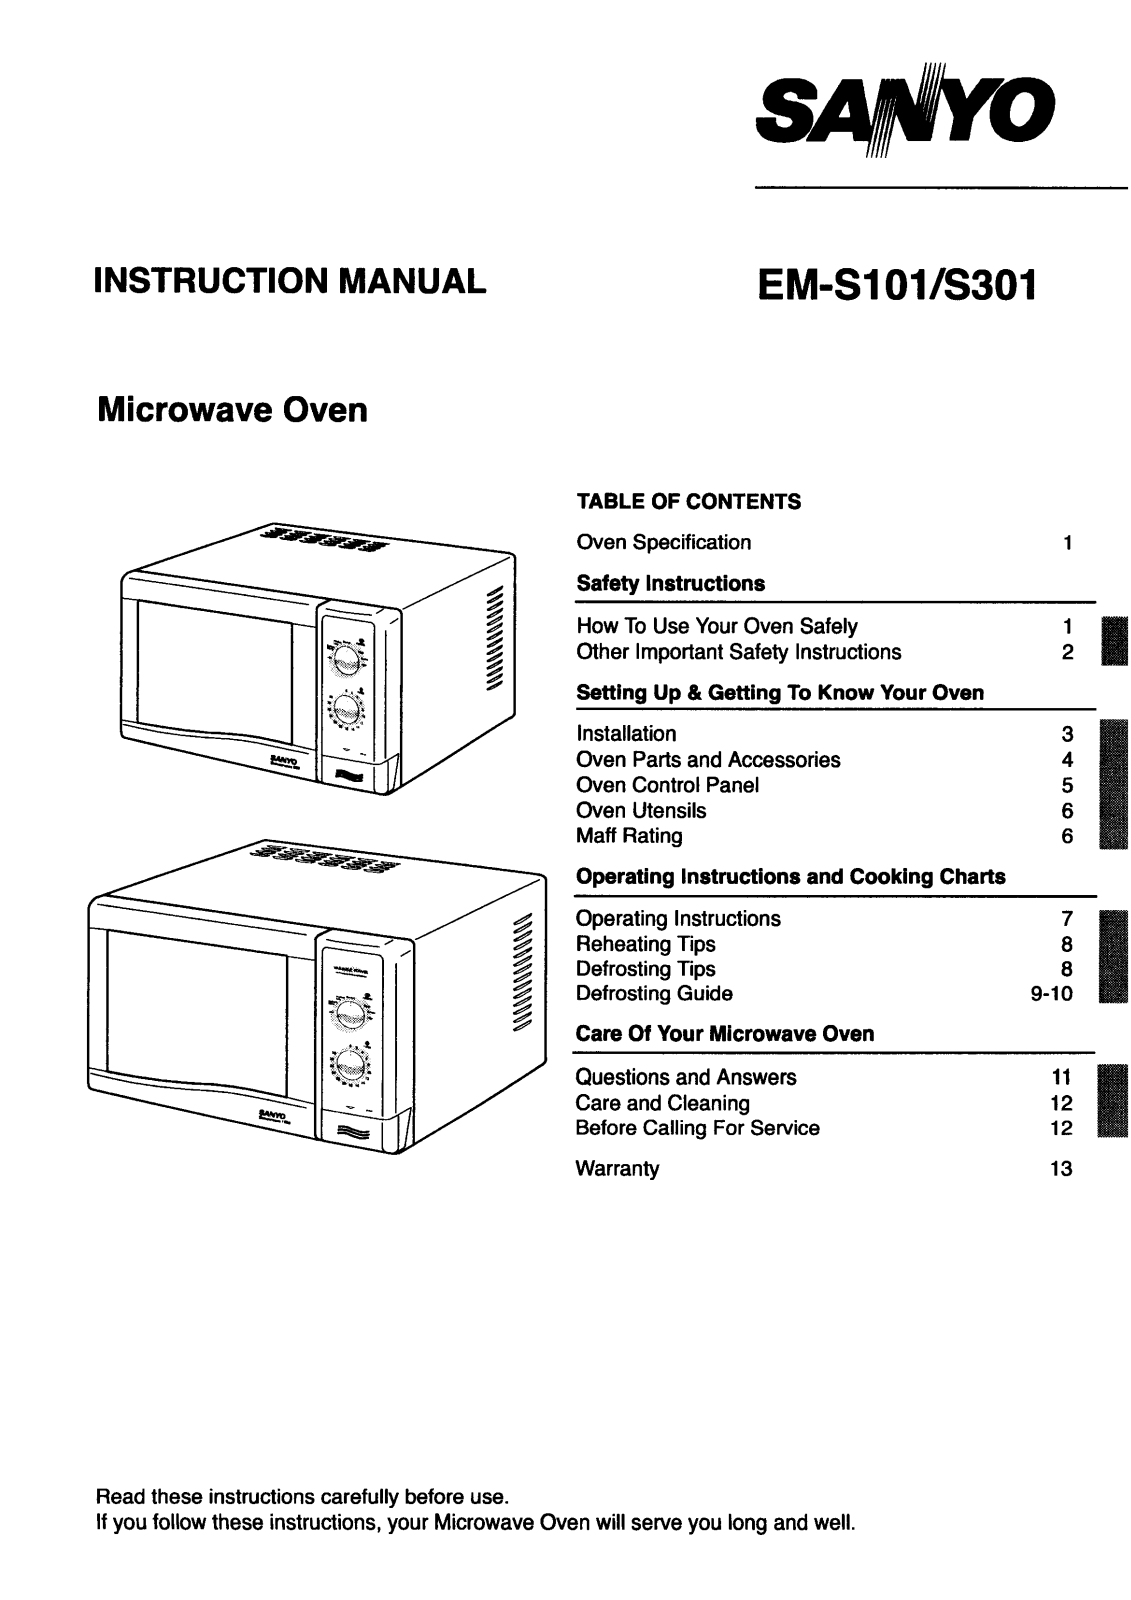 Sanyo EM-S101 Instruction Manual